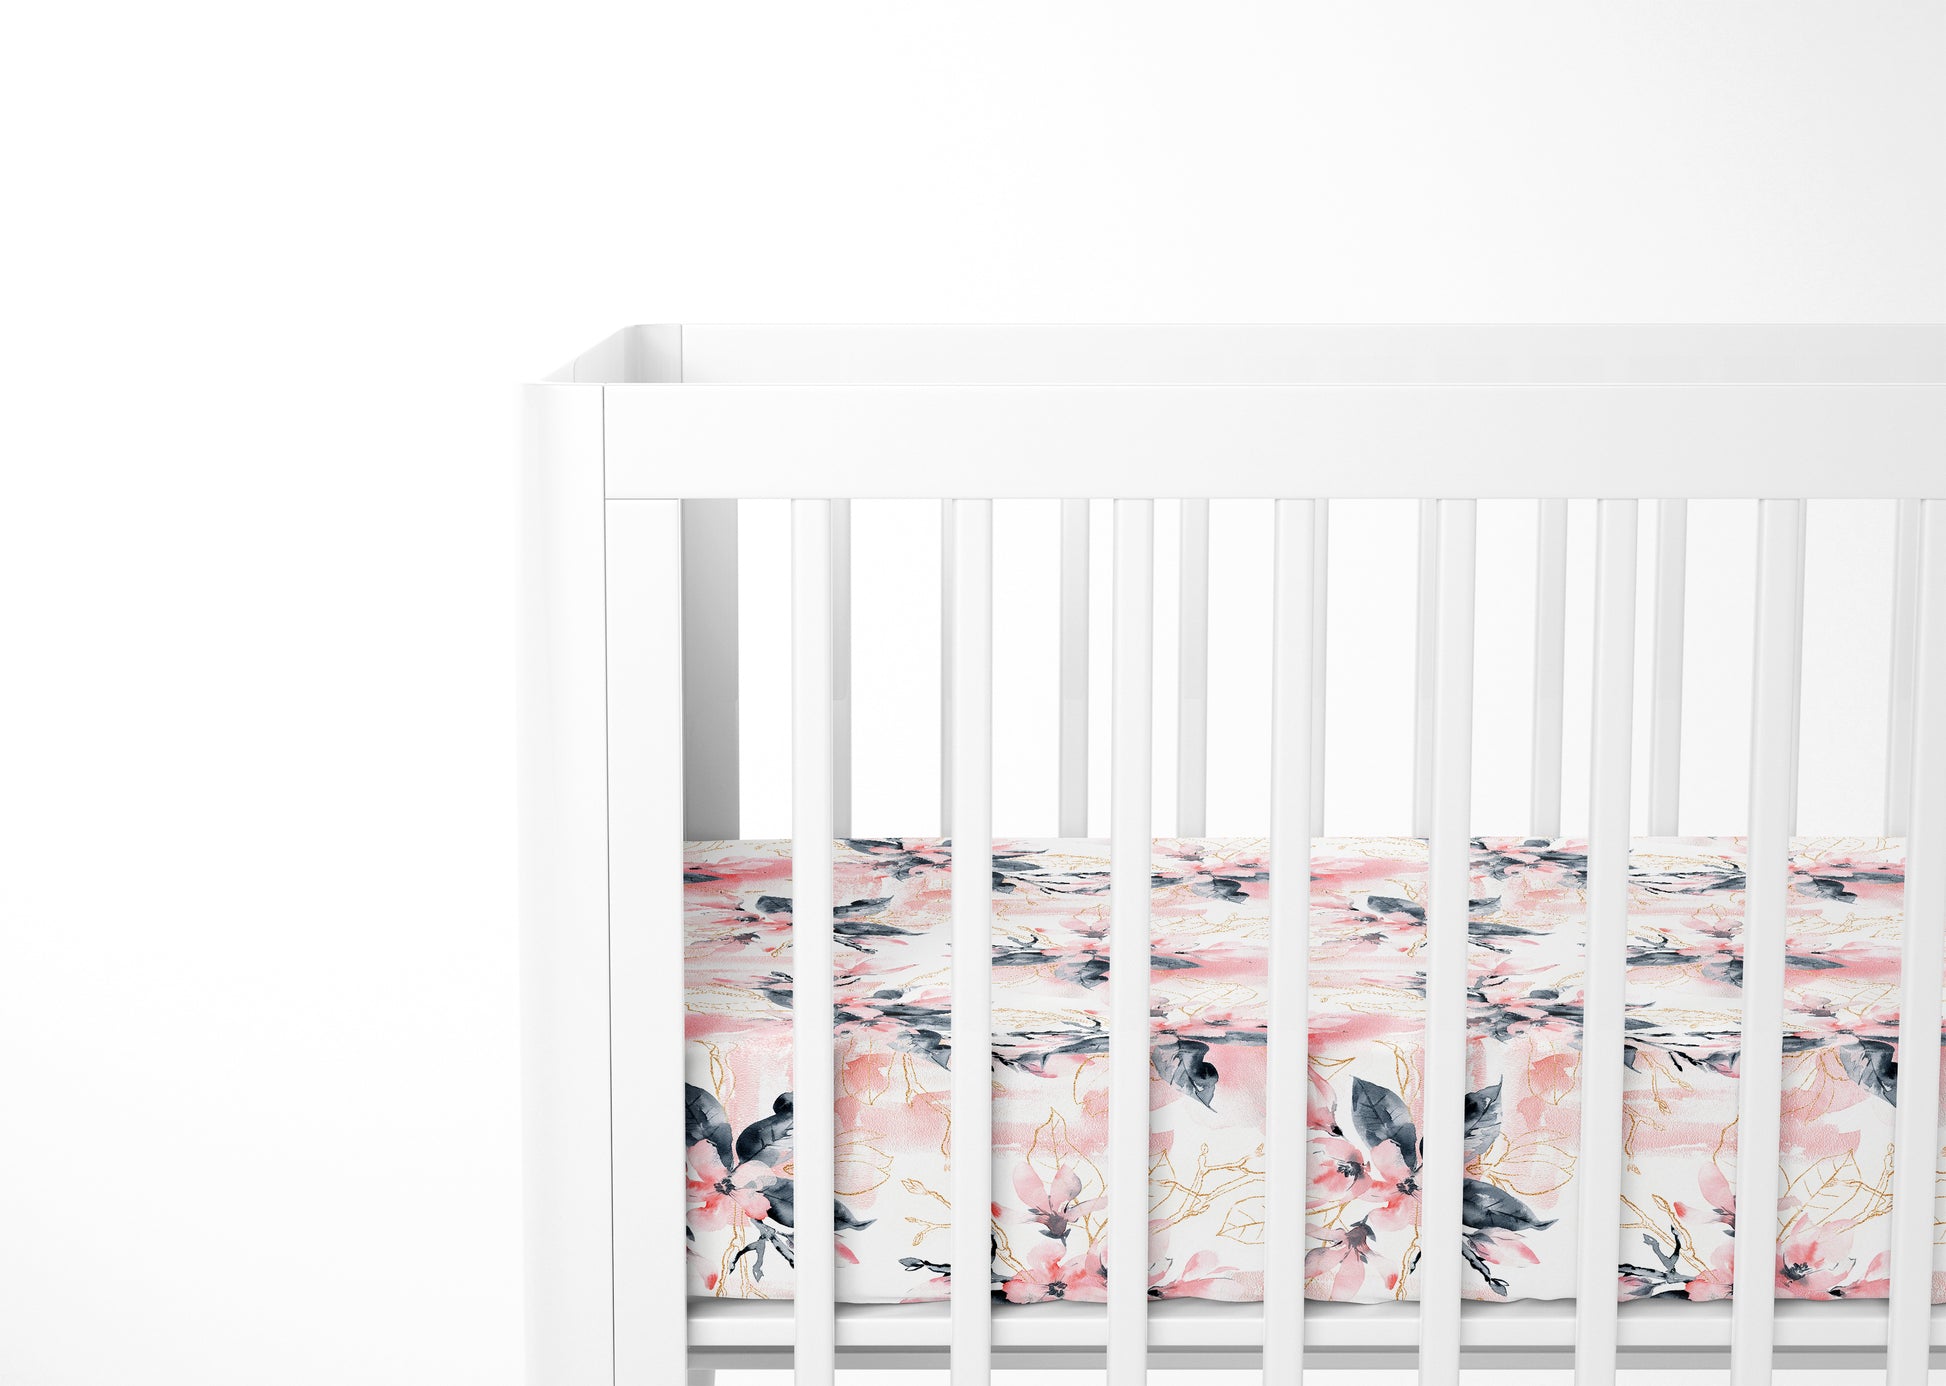 Mini Crib / Pack N Play Sheet | Pink and White Floral - One Kind Clothing, LLC